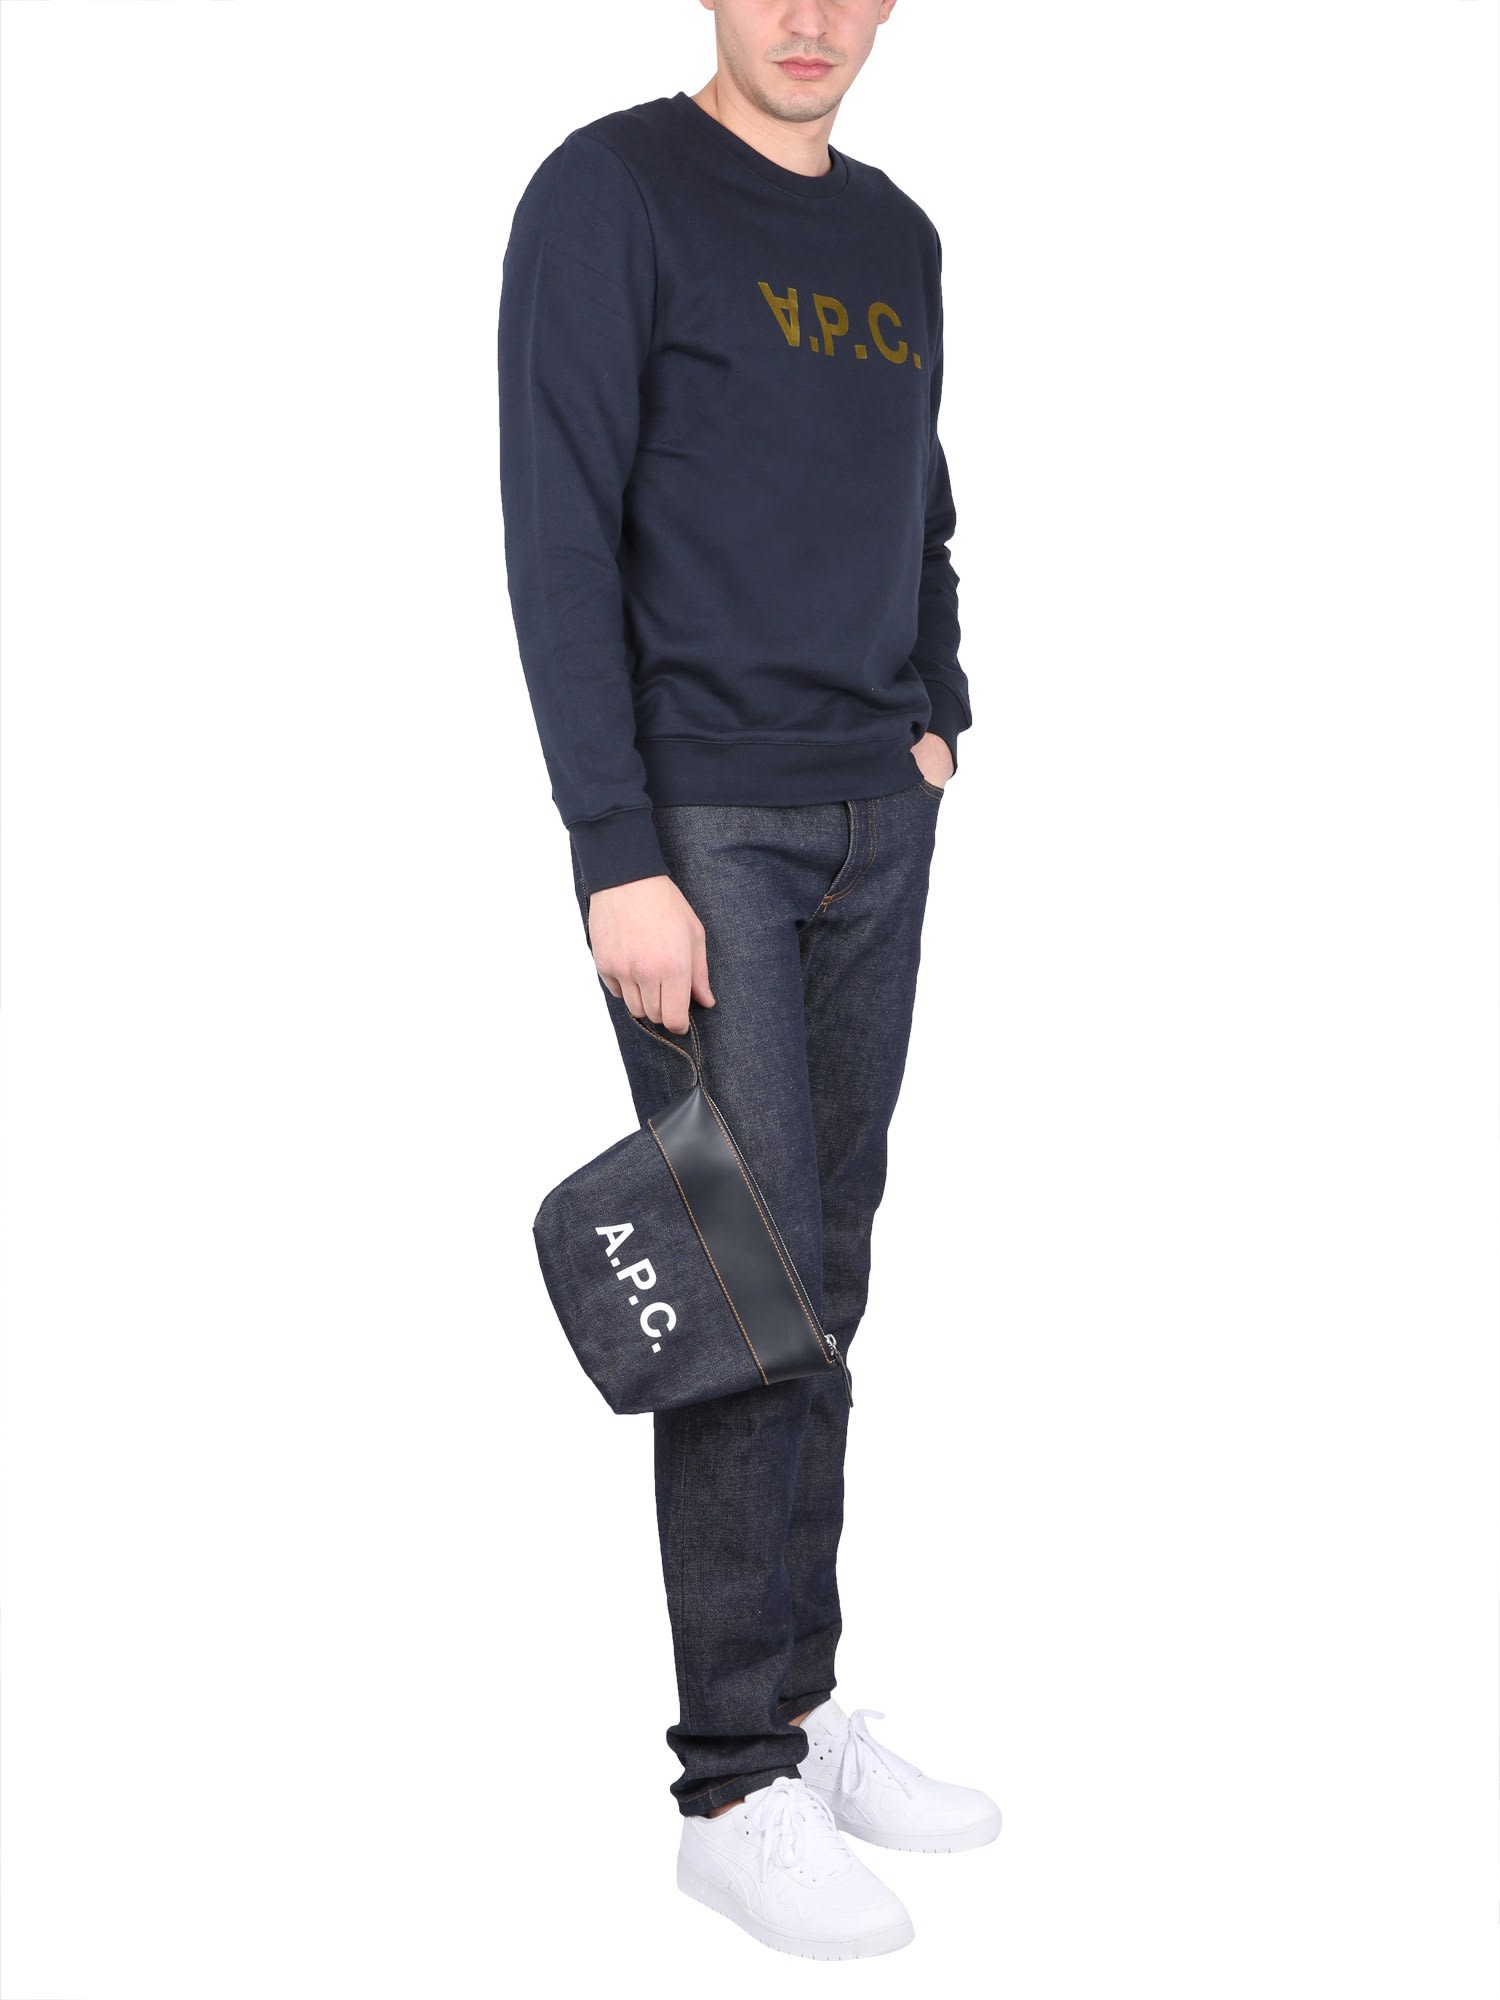 Shop Apc Sweatshirt With V.p.c Logo In Tis Marine Kaki